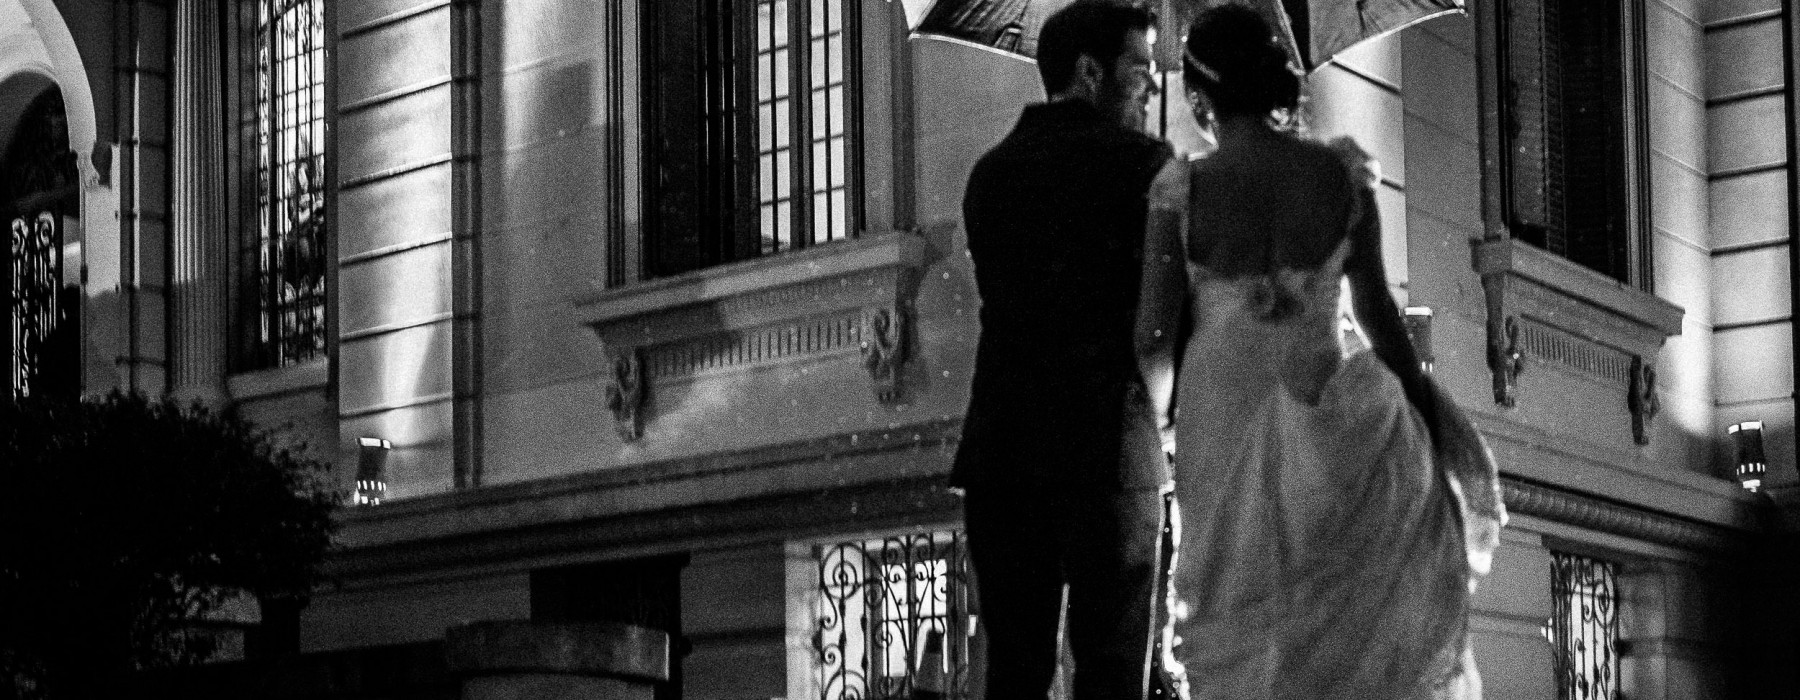 renato-dpaula-casamento-na-chuva-noivos-fotografia